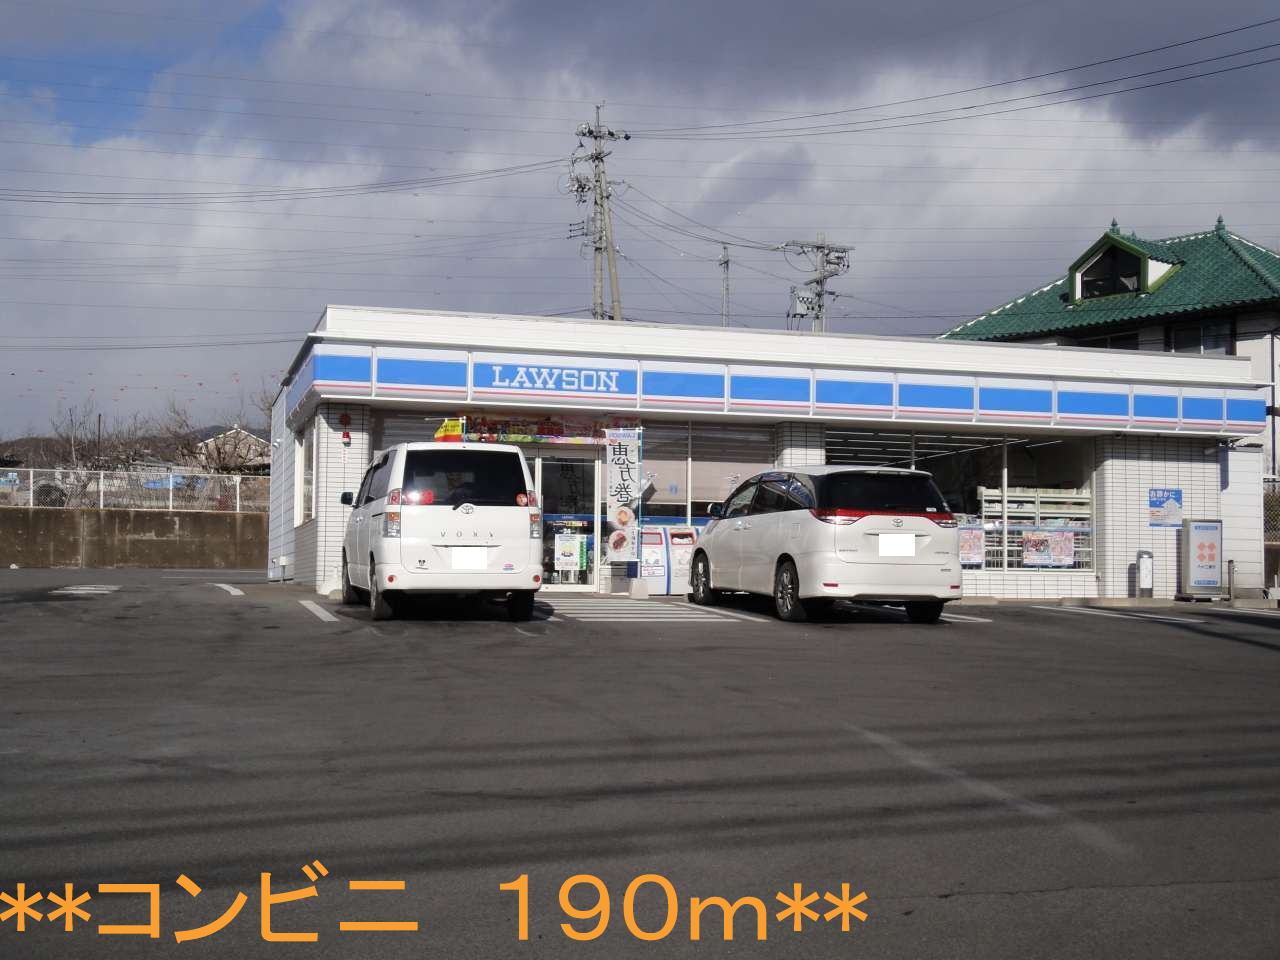 Convenience store. 190m until Lawson Tomi sum store (convenience store)